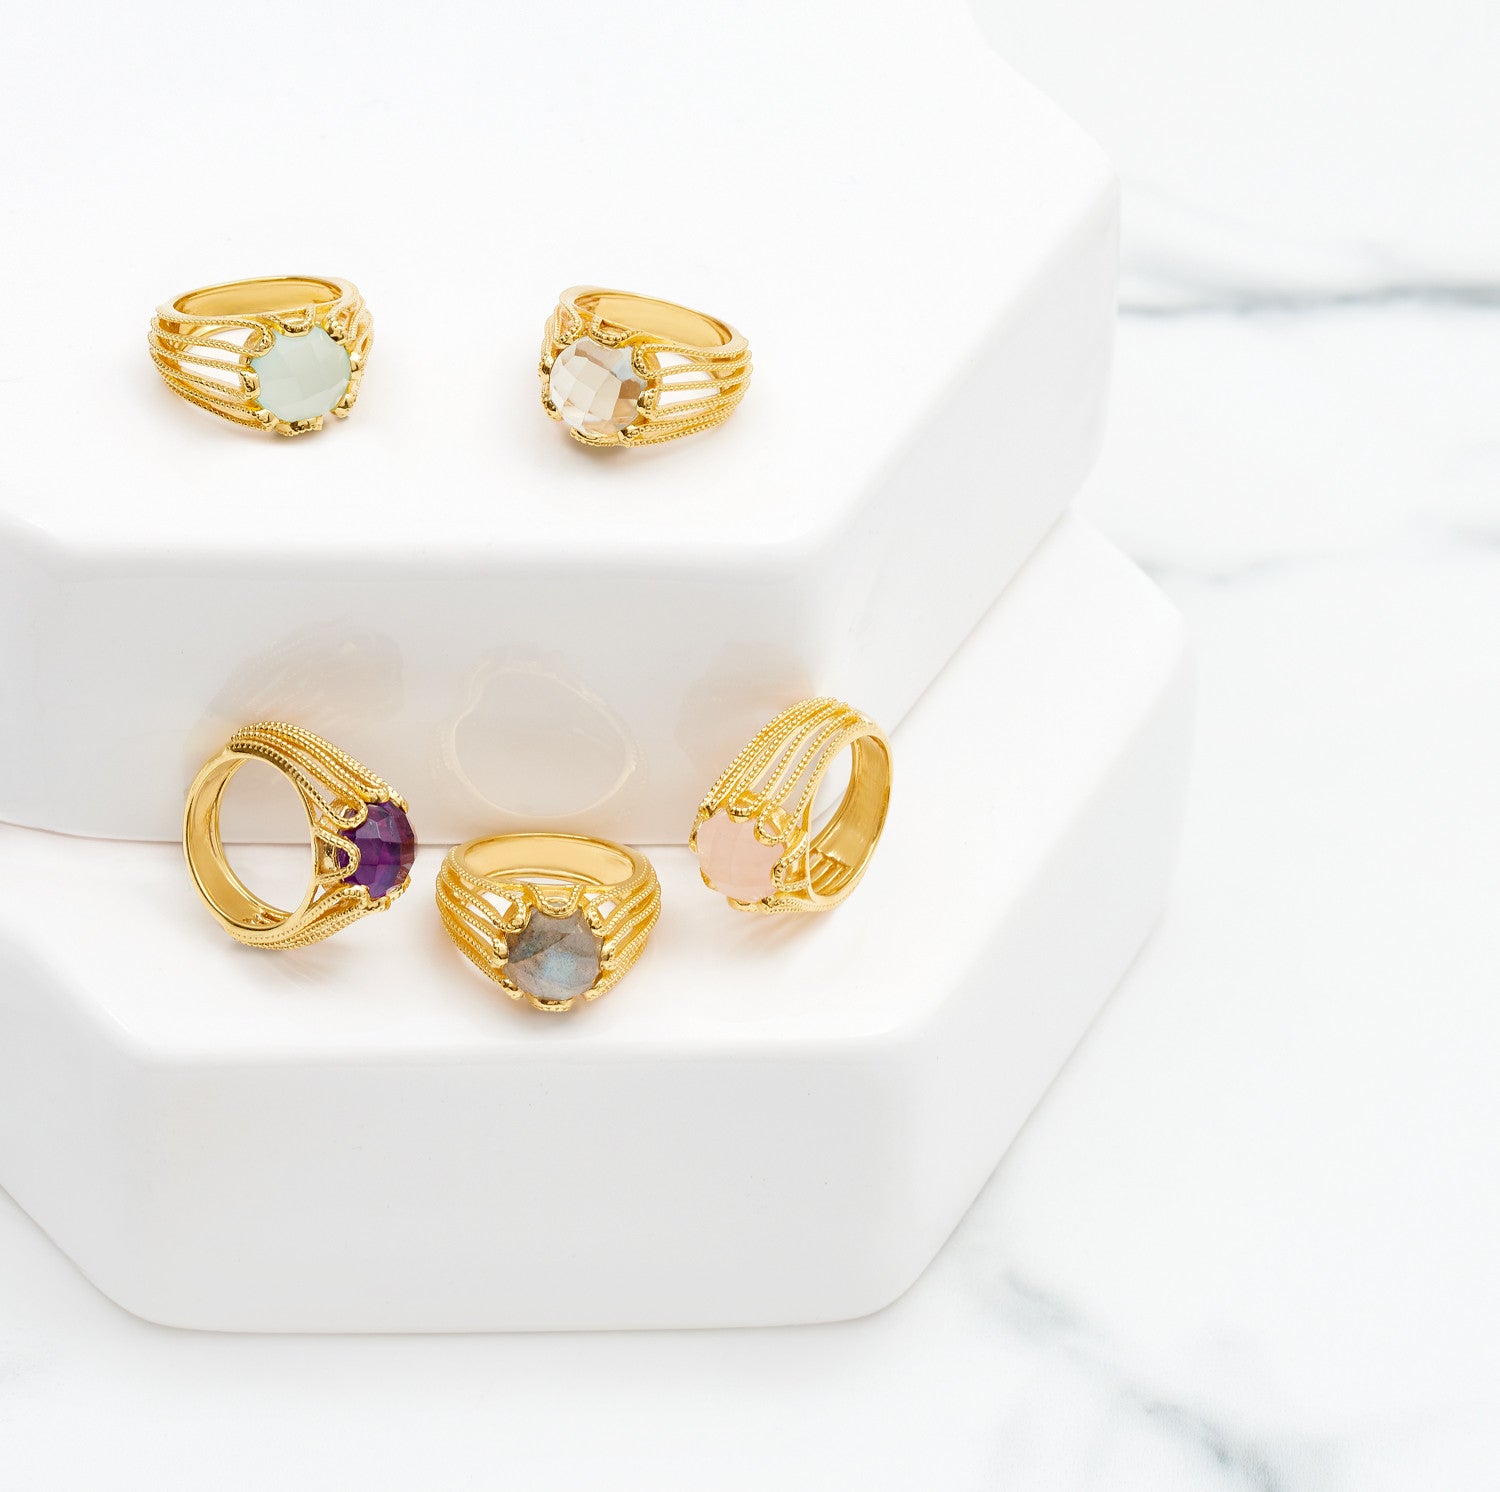 Cocktail Rings with natural gemstones in vibrant colours, handmade, unique British design